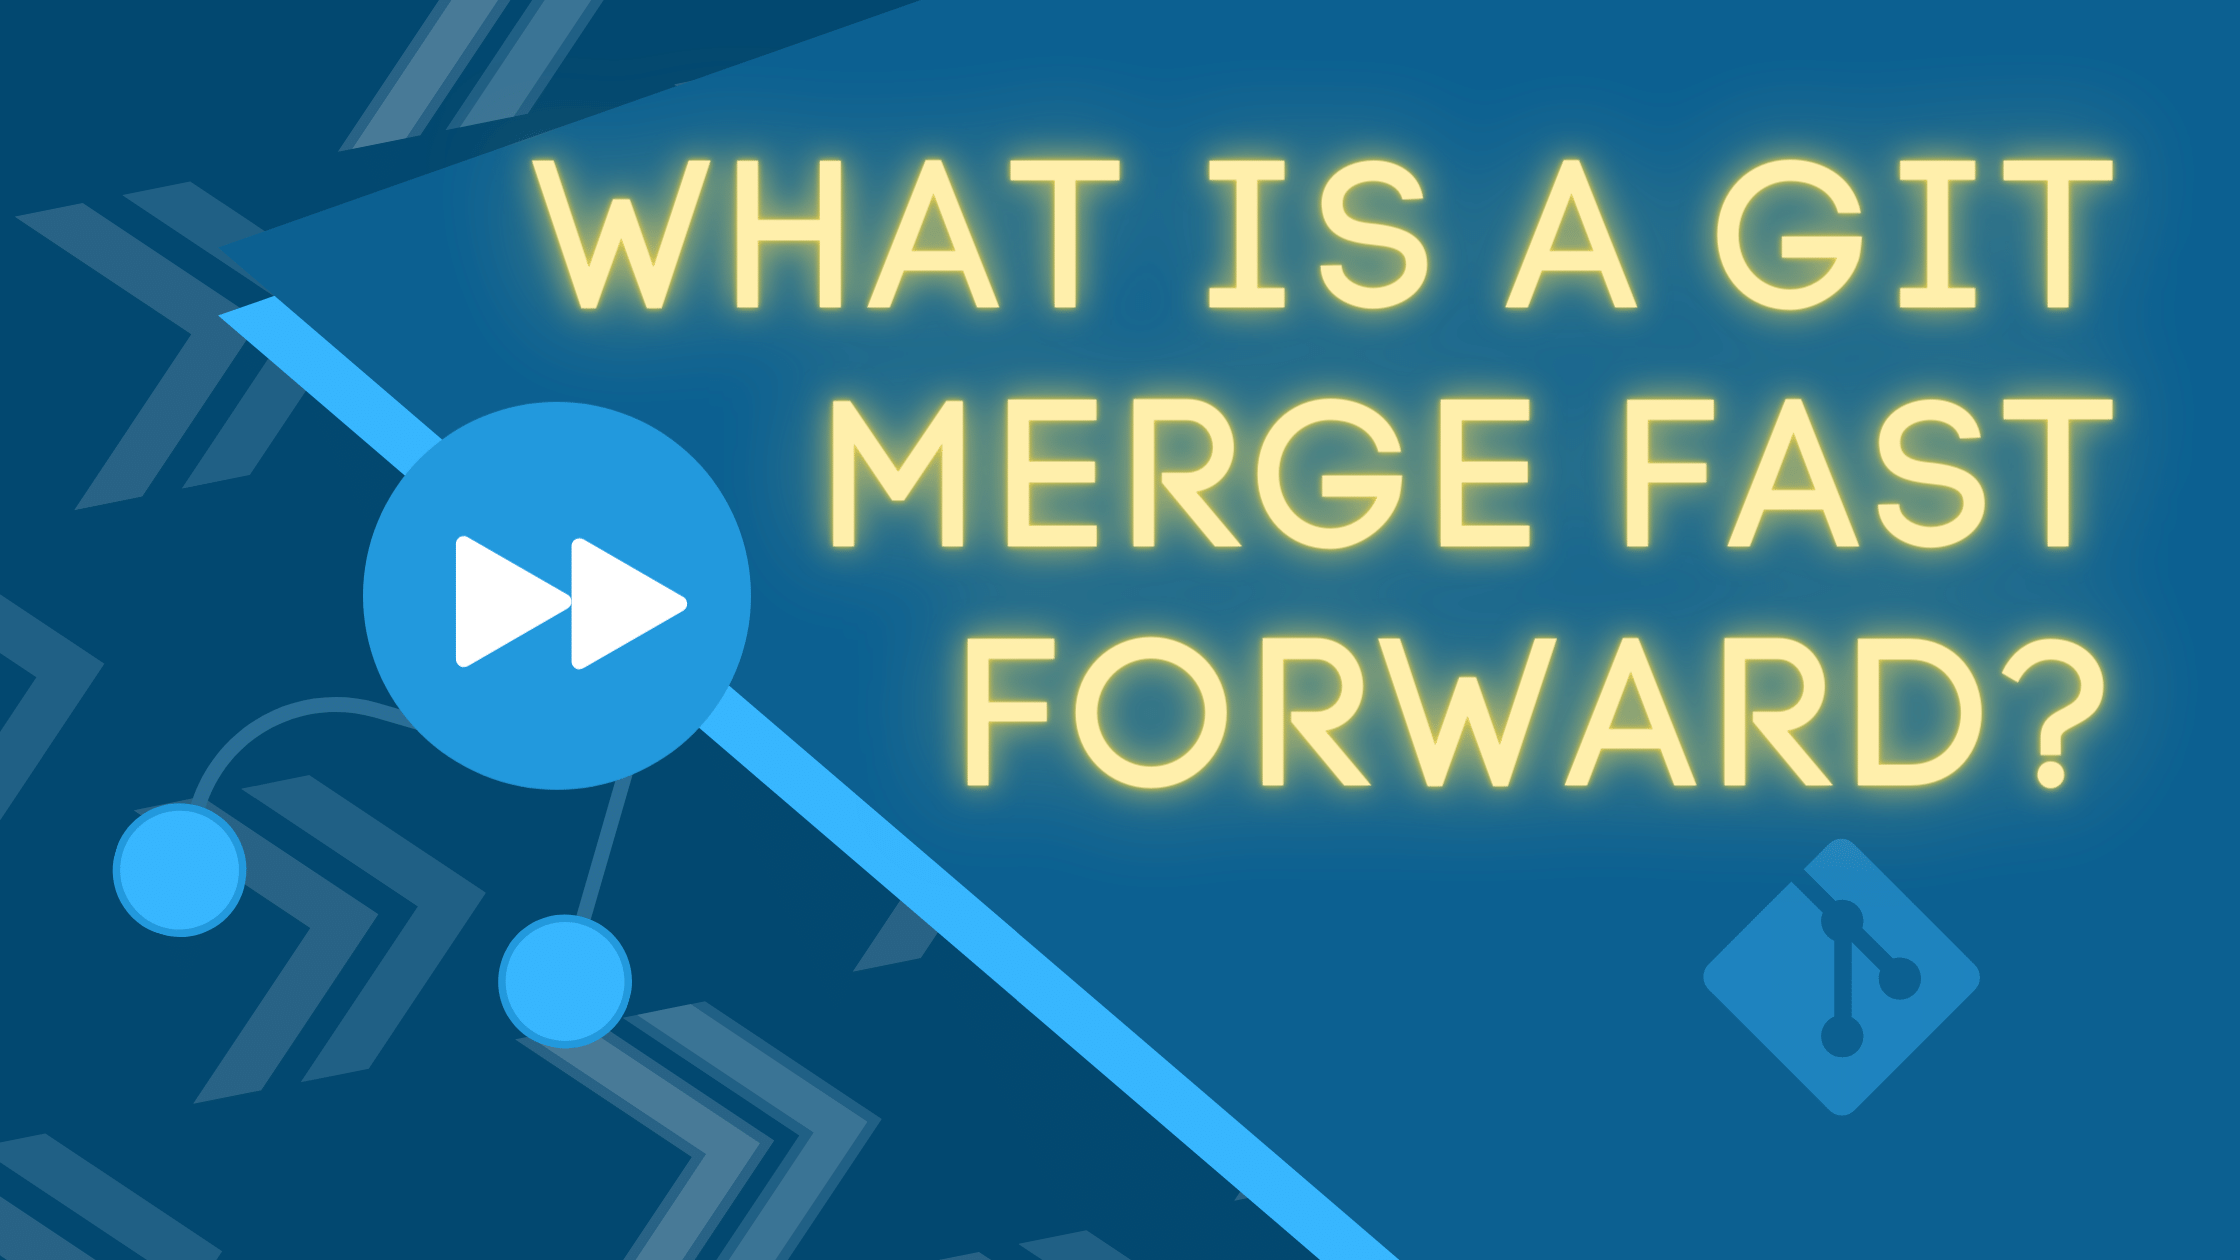 What Is a Git Merge Fast Forward?